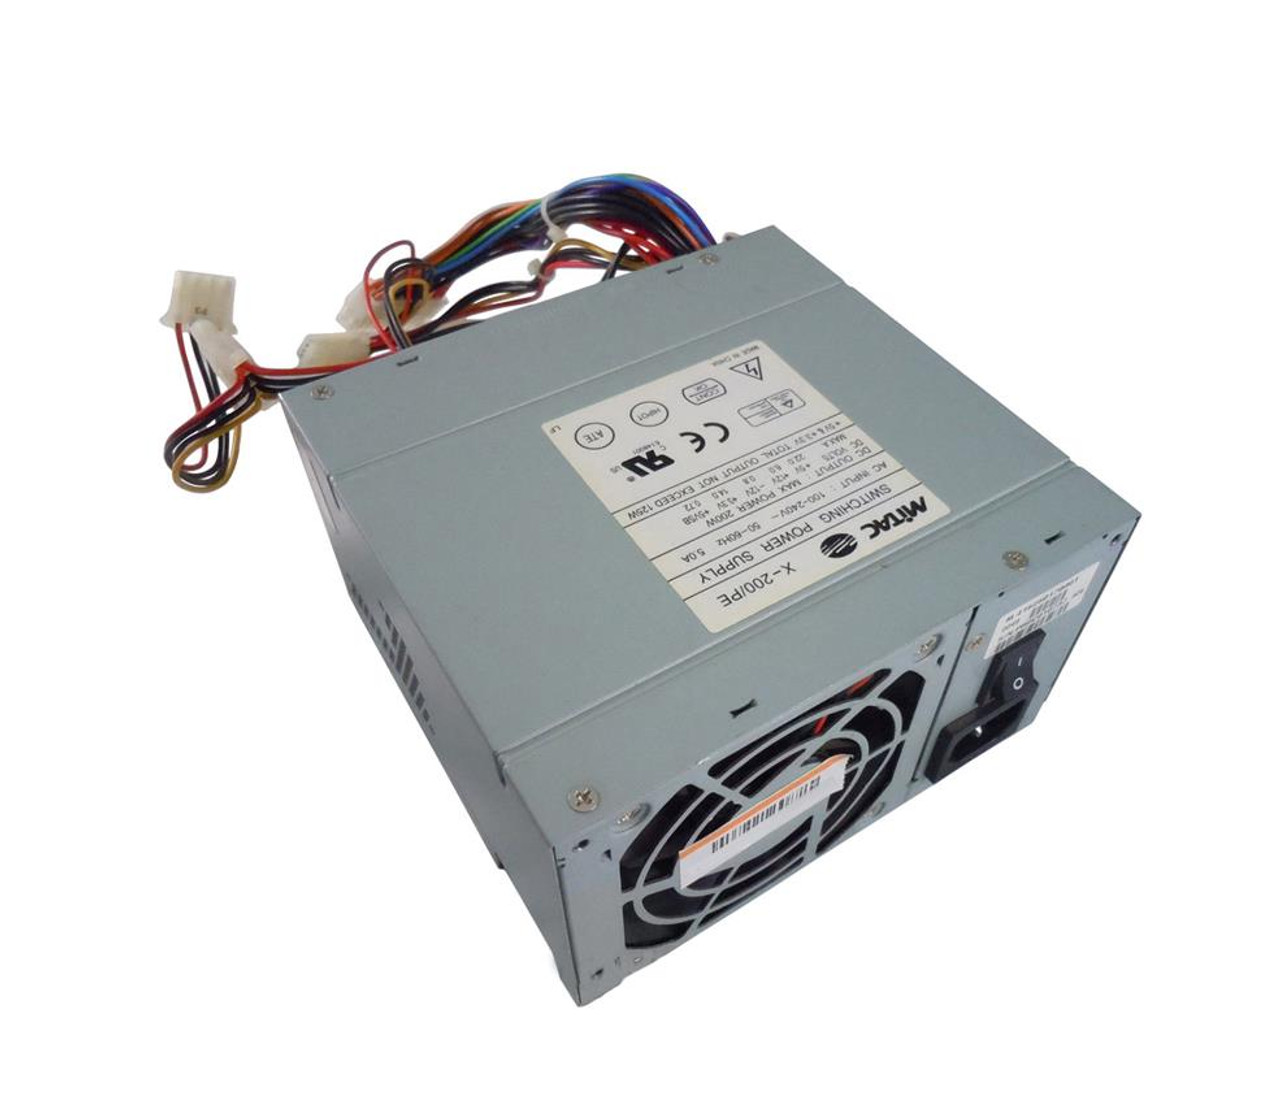 370-4326 Sun 200-Watts AC Input Power Supply With Power Cord